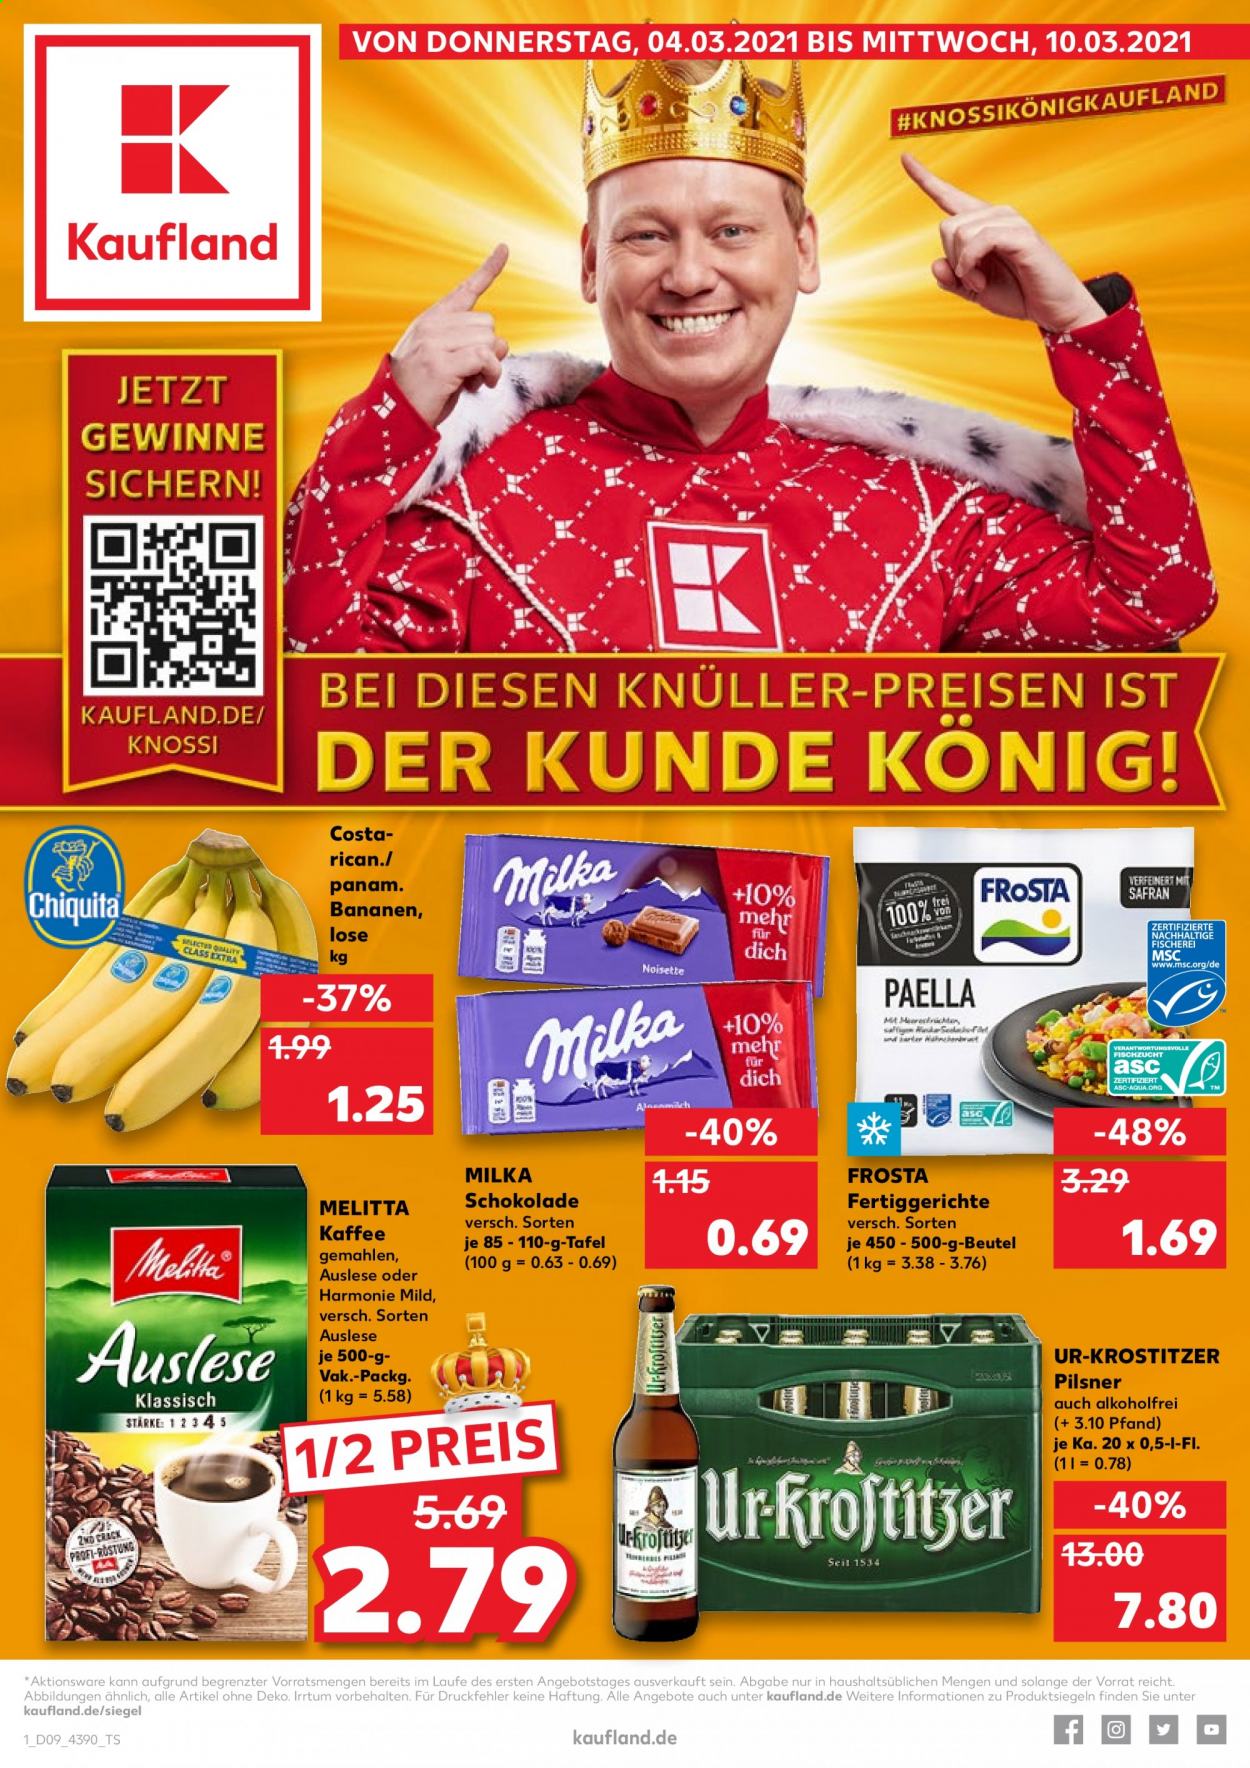 thumbnail - Prospekte Kaufland - 4.03.2021 - 10.03.2021 - Produkte in Aktion - Pils, Bananen, Frosta, Milka, Schokolade, Kaffee, Melitta. Seite 1.